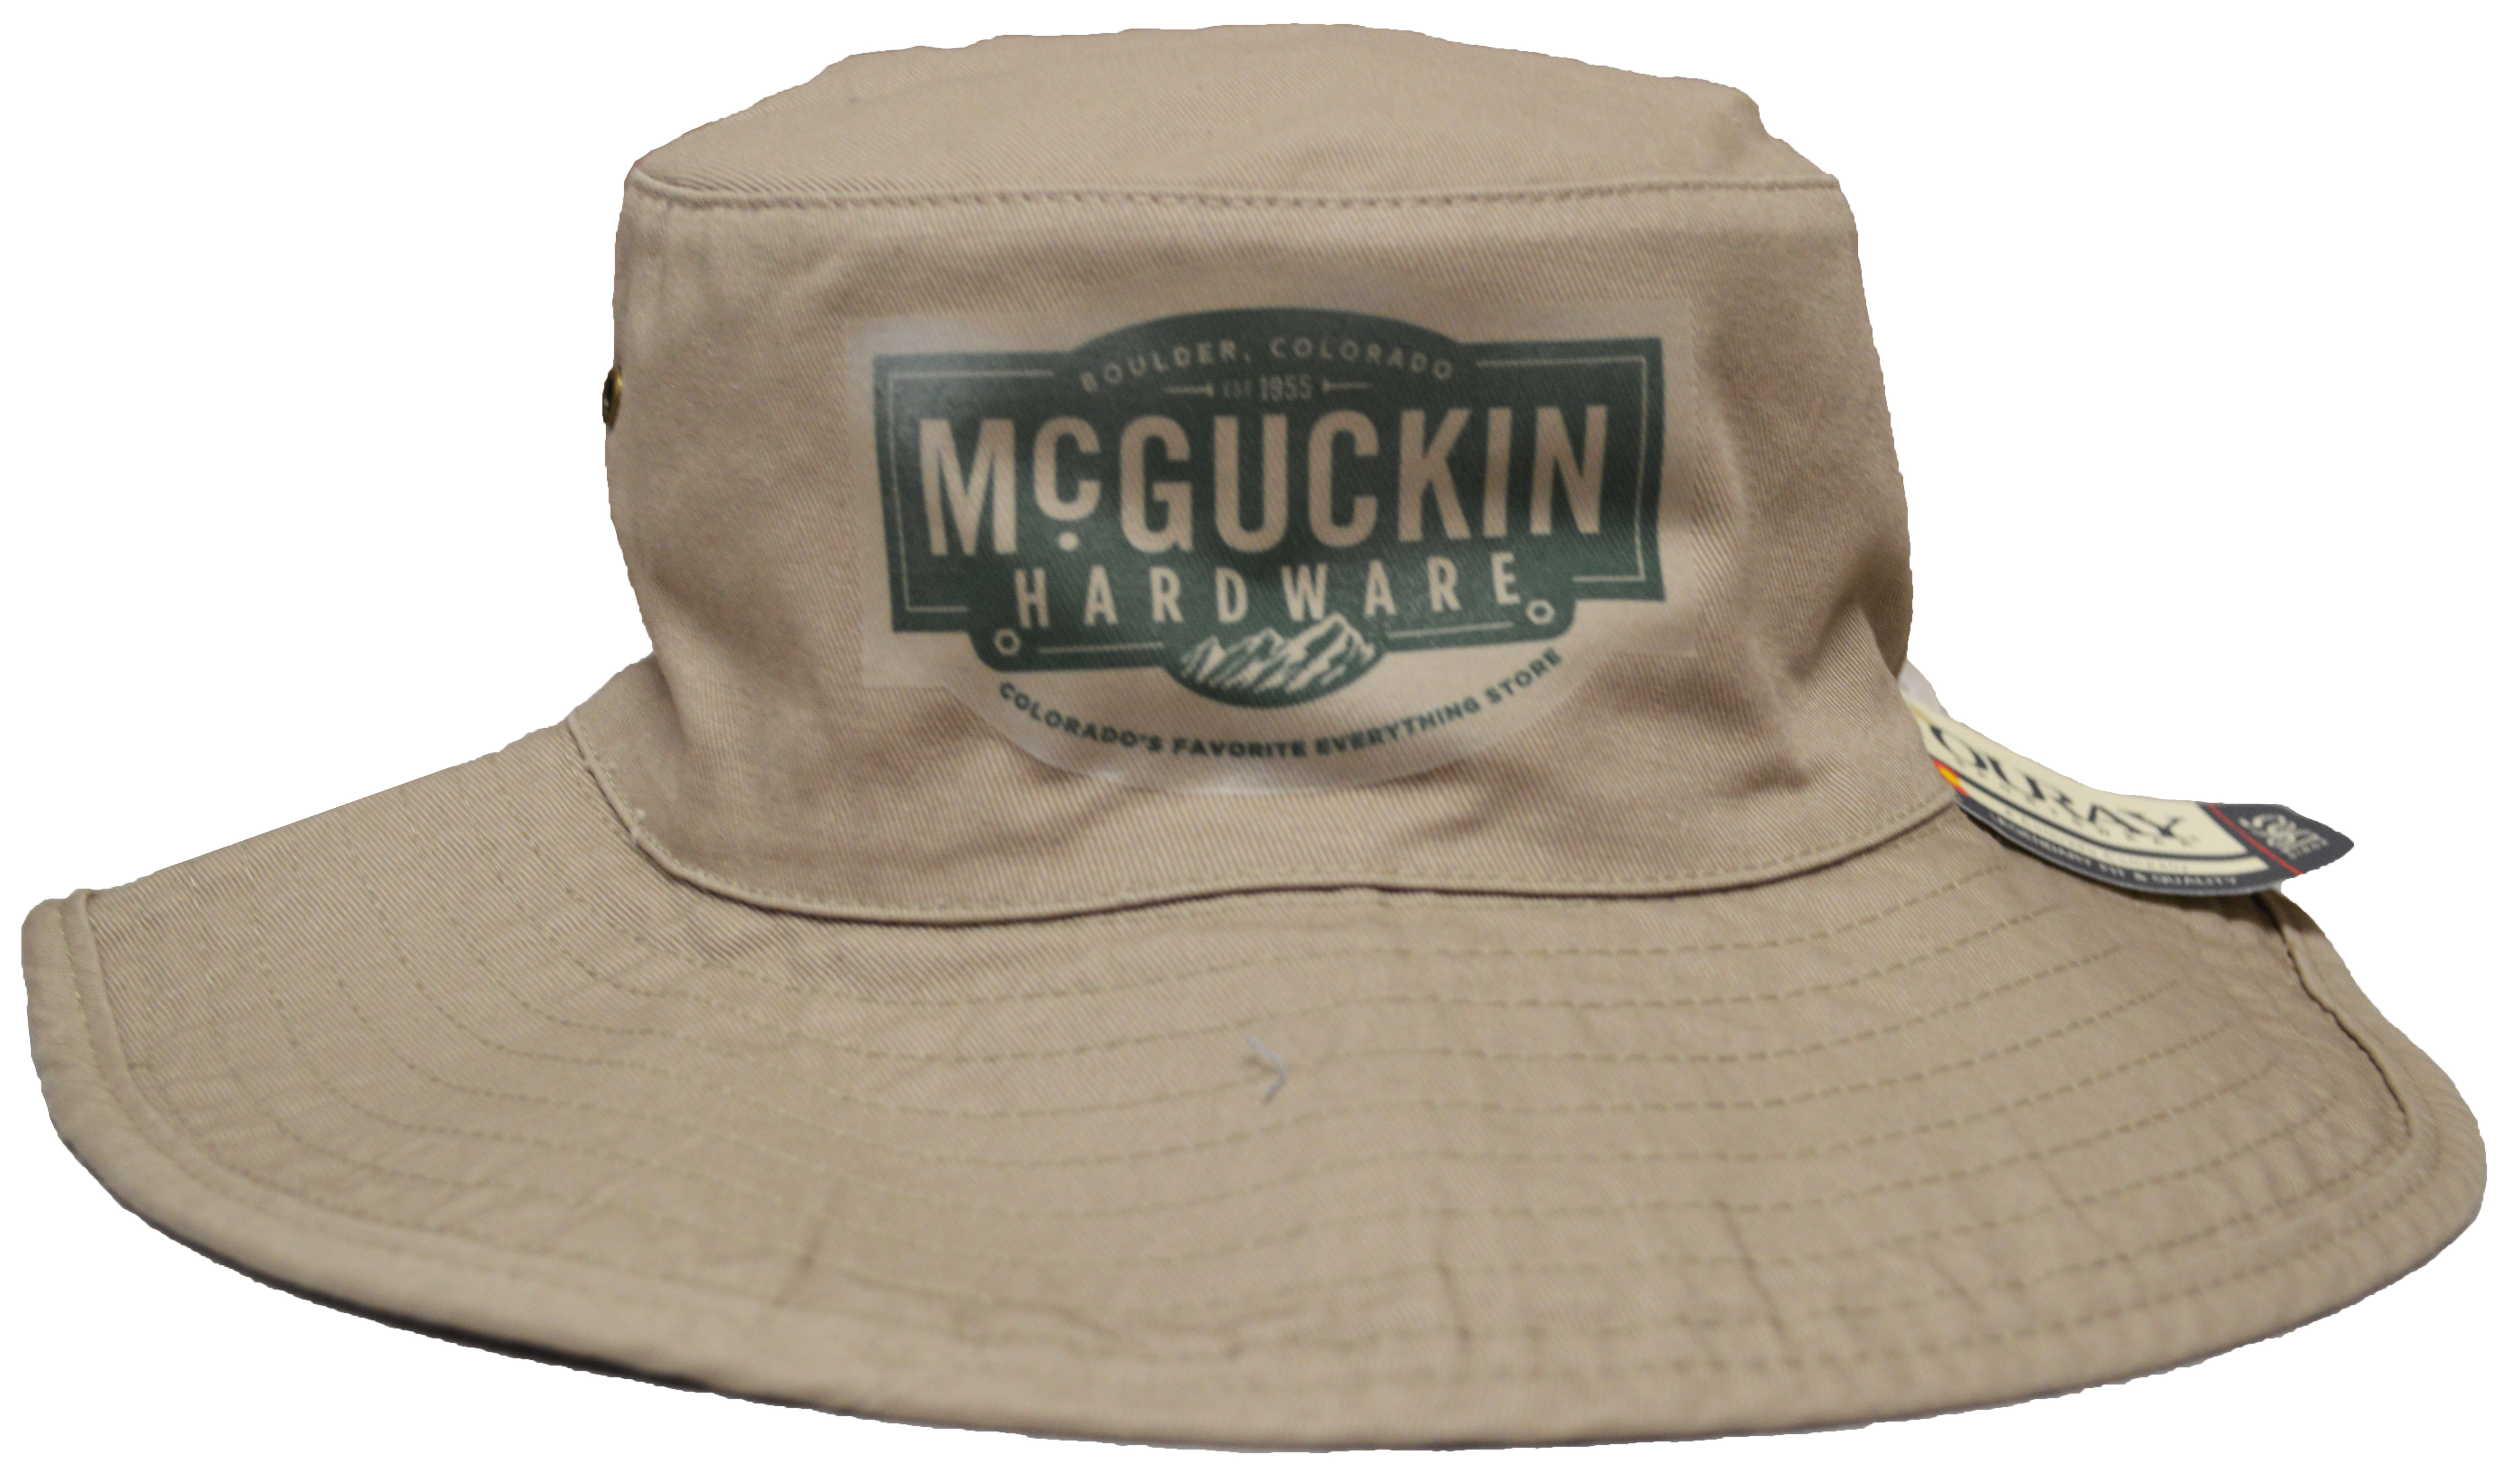 Mcguckin 51010 KH LG